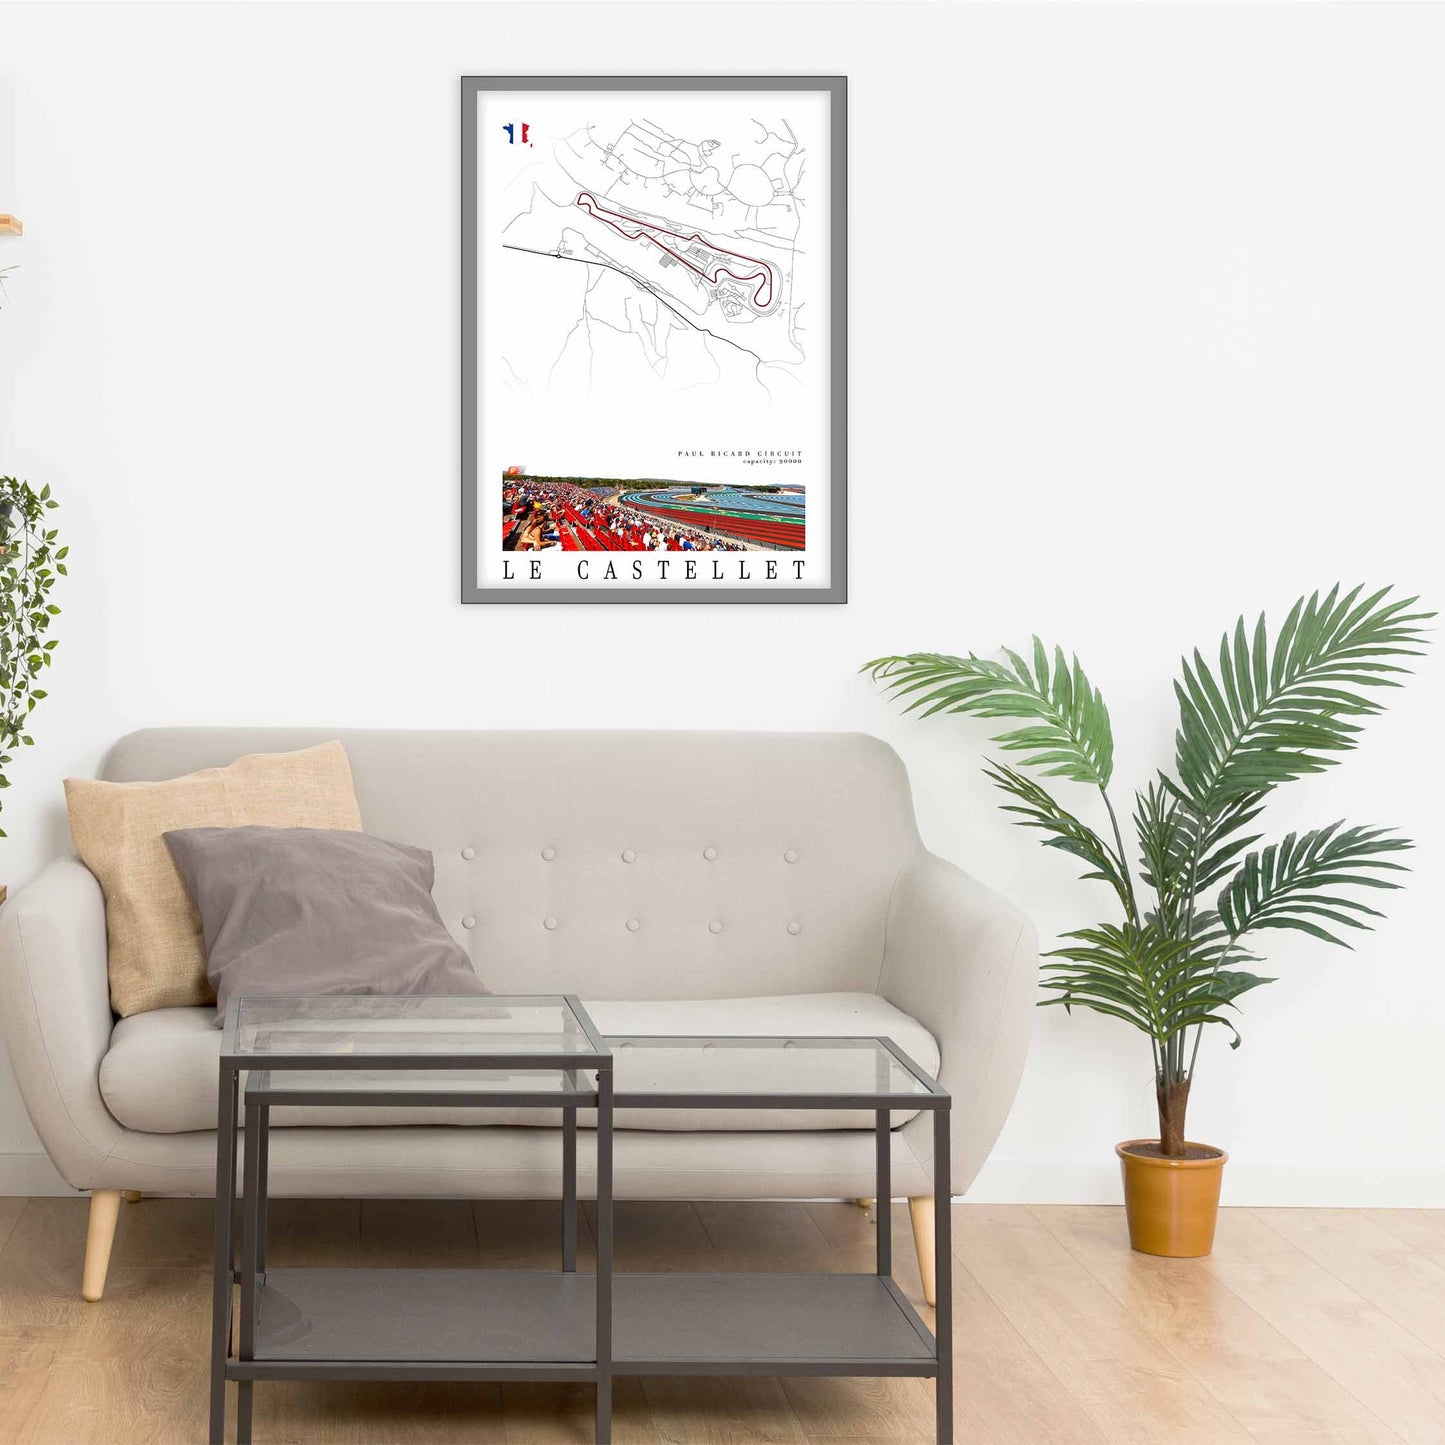 City map of LE CASTELLET - Circuit Paul Ricard - Home Decor Le Castellet - France Grand Prix - Formula 1 gift - Printed map